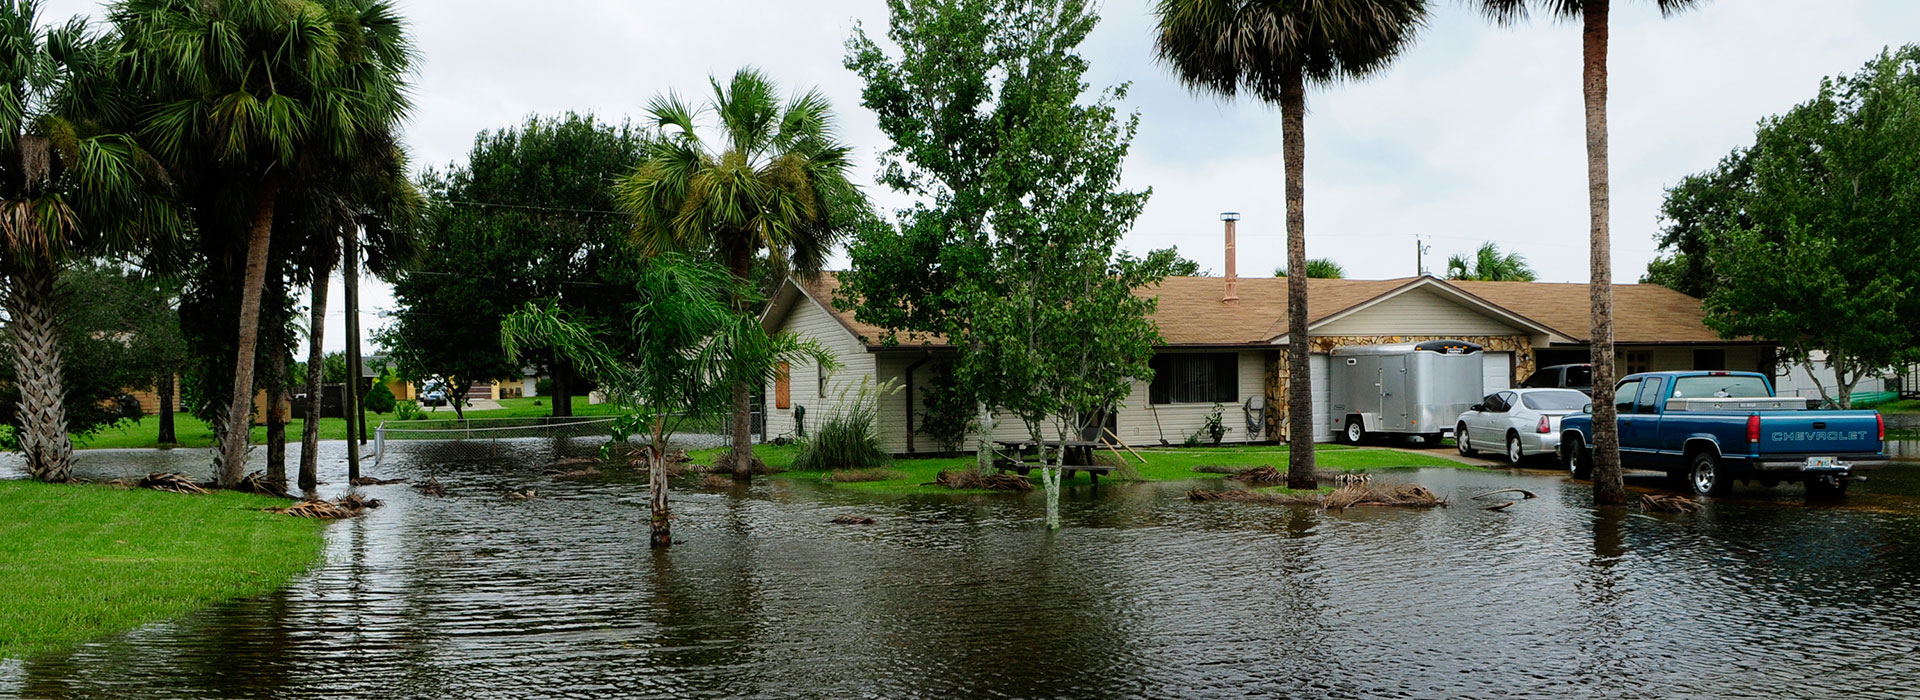 flood insurance quote oregon